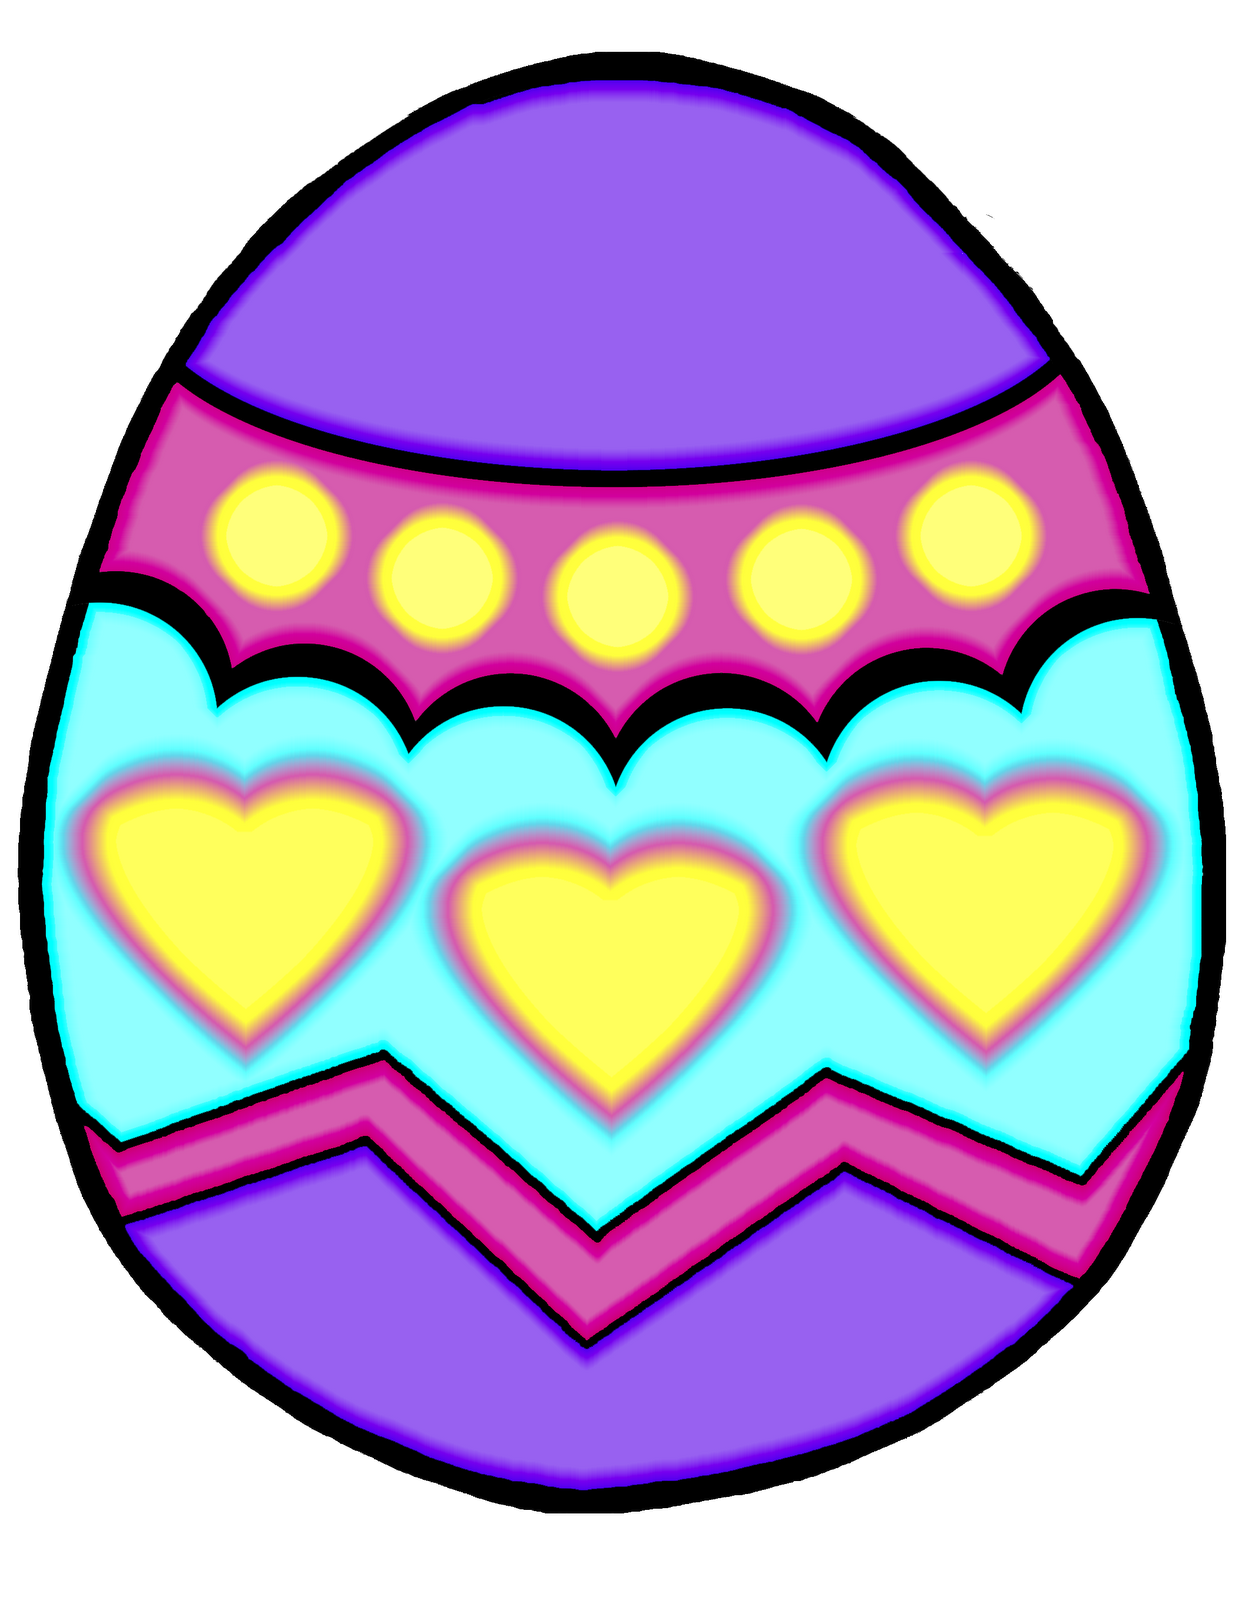 Easter egg clipart - ClipartF